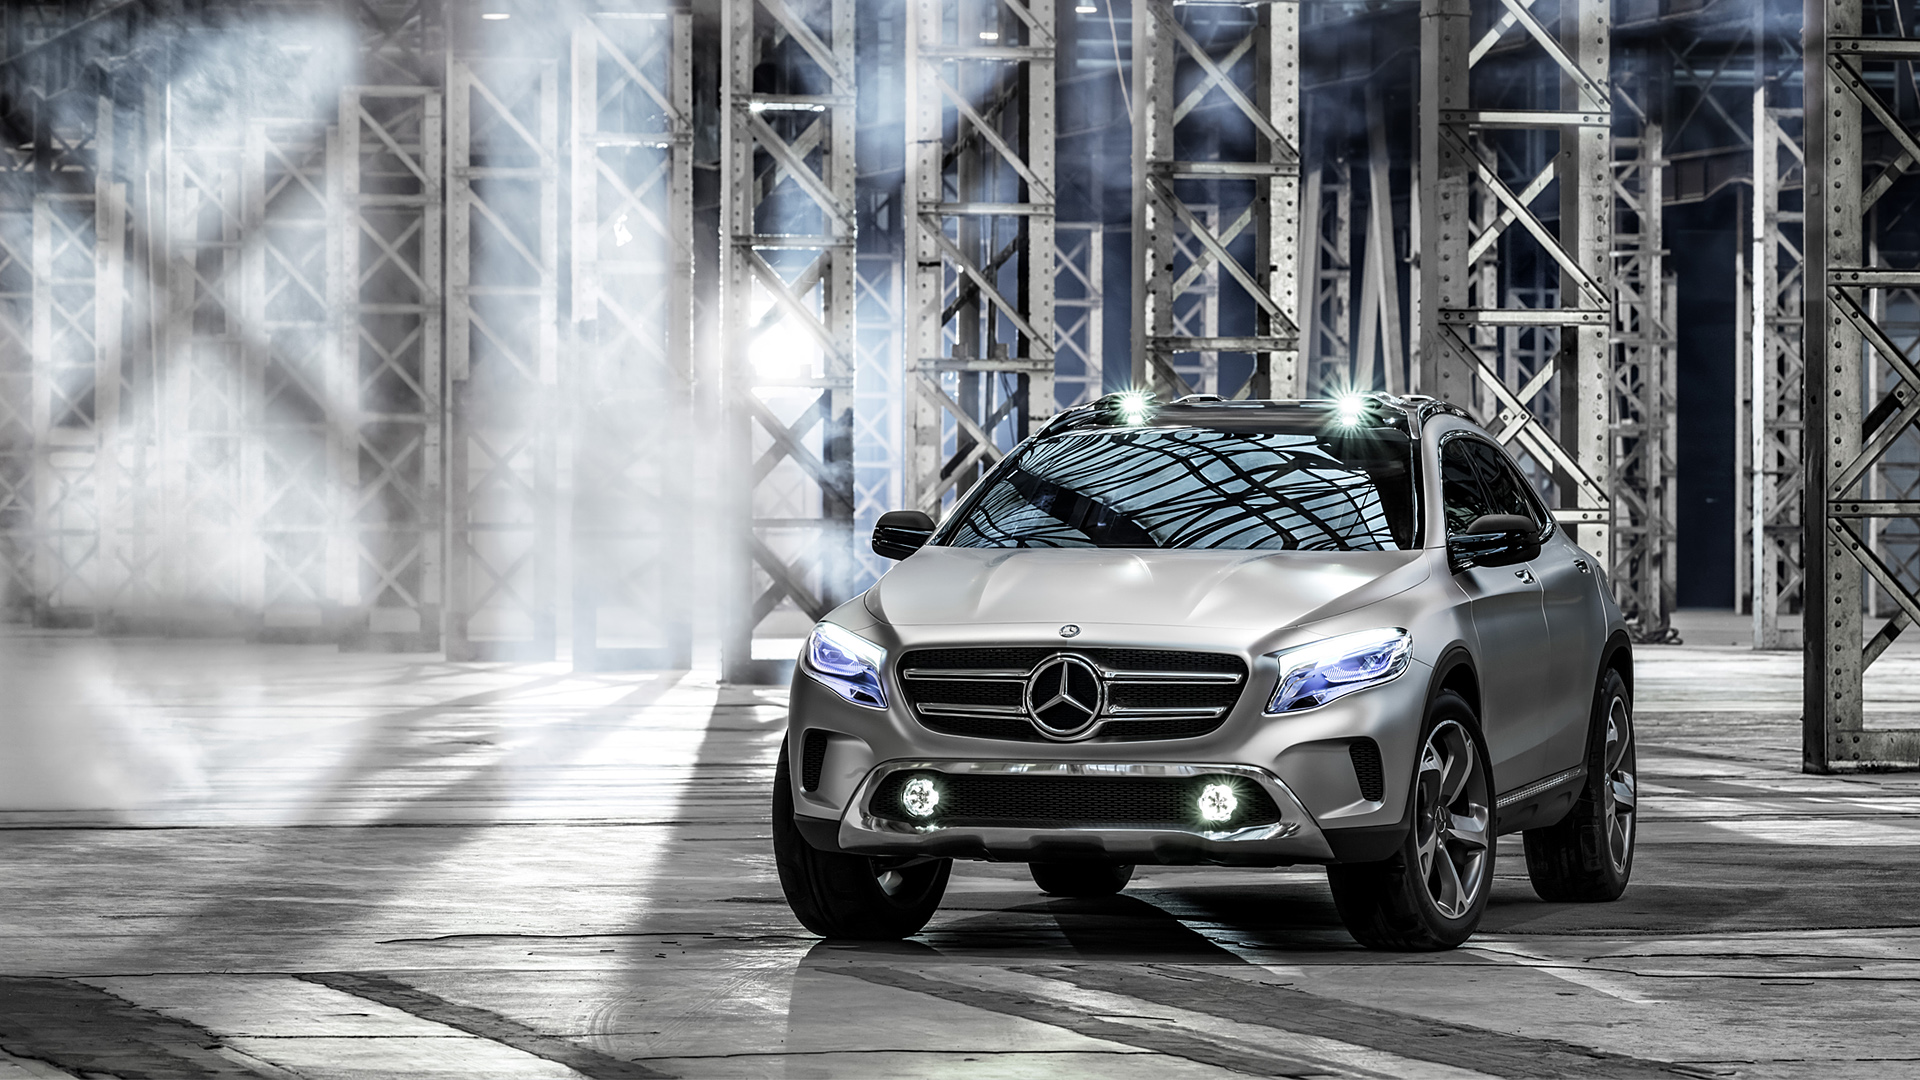 Mercedes Benz Gla Concept Wallpaper HD Image Wsupercars